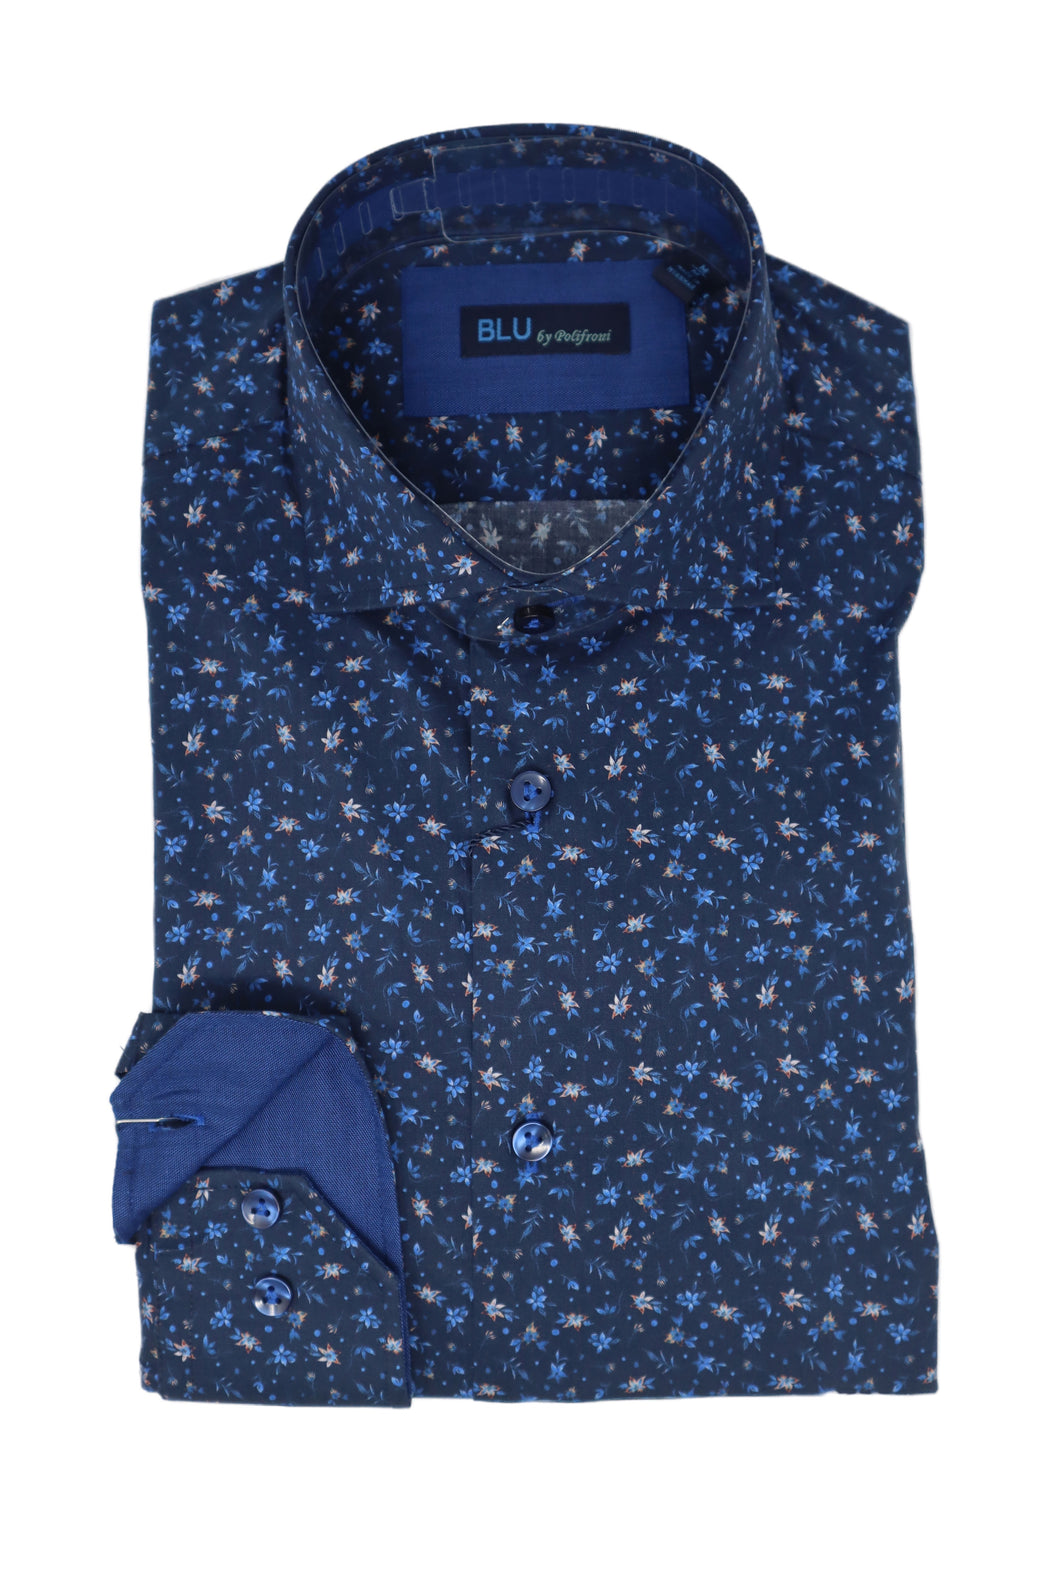 Men's | Blu by Polifroni | 2249656 | Sport Shirt | Navy / Flower Pattern